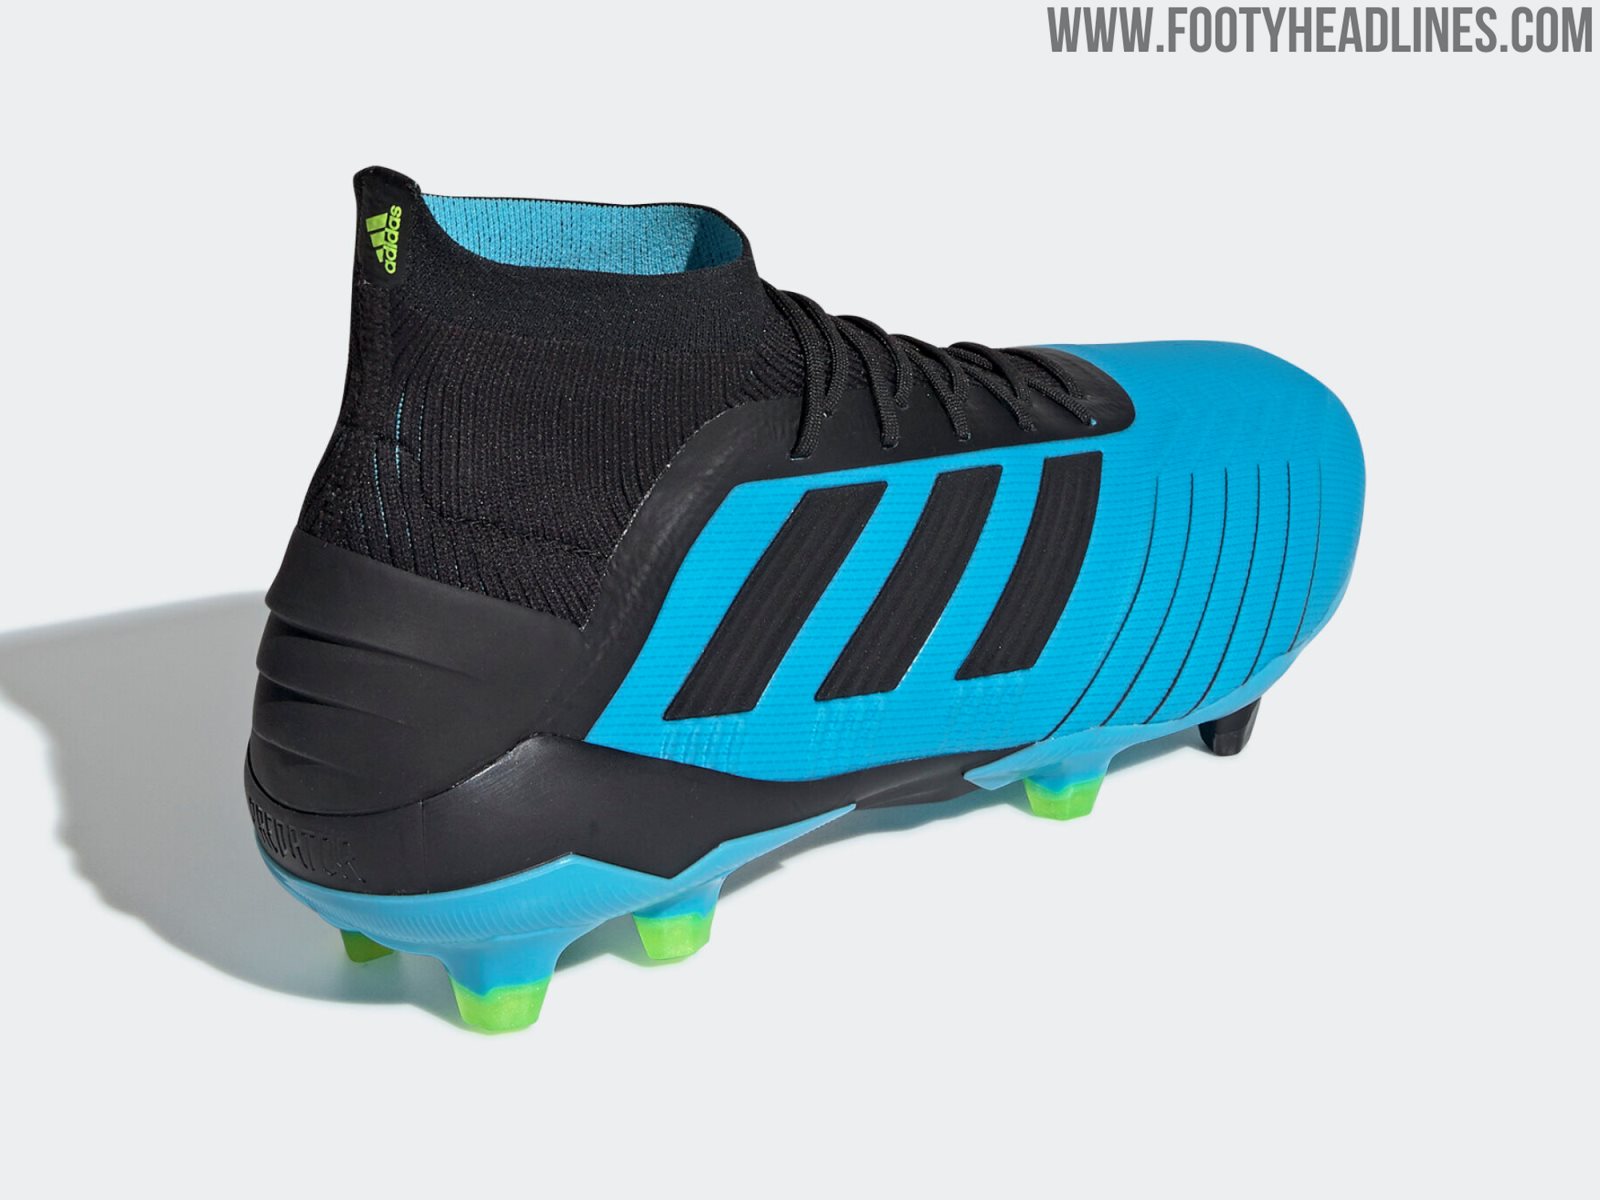 Bright Cyan Adidas Predator 19.1 'Hard Wired' Boots Released